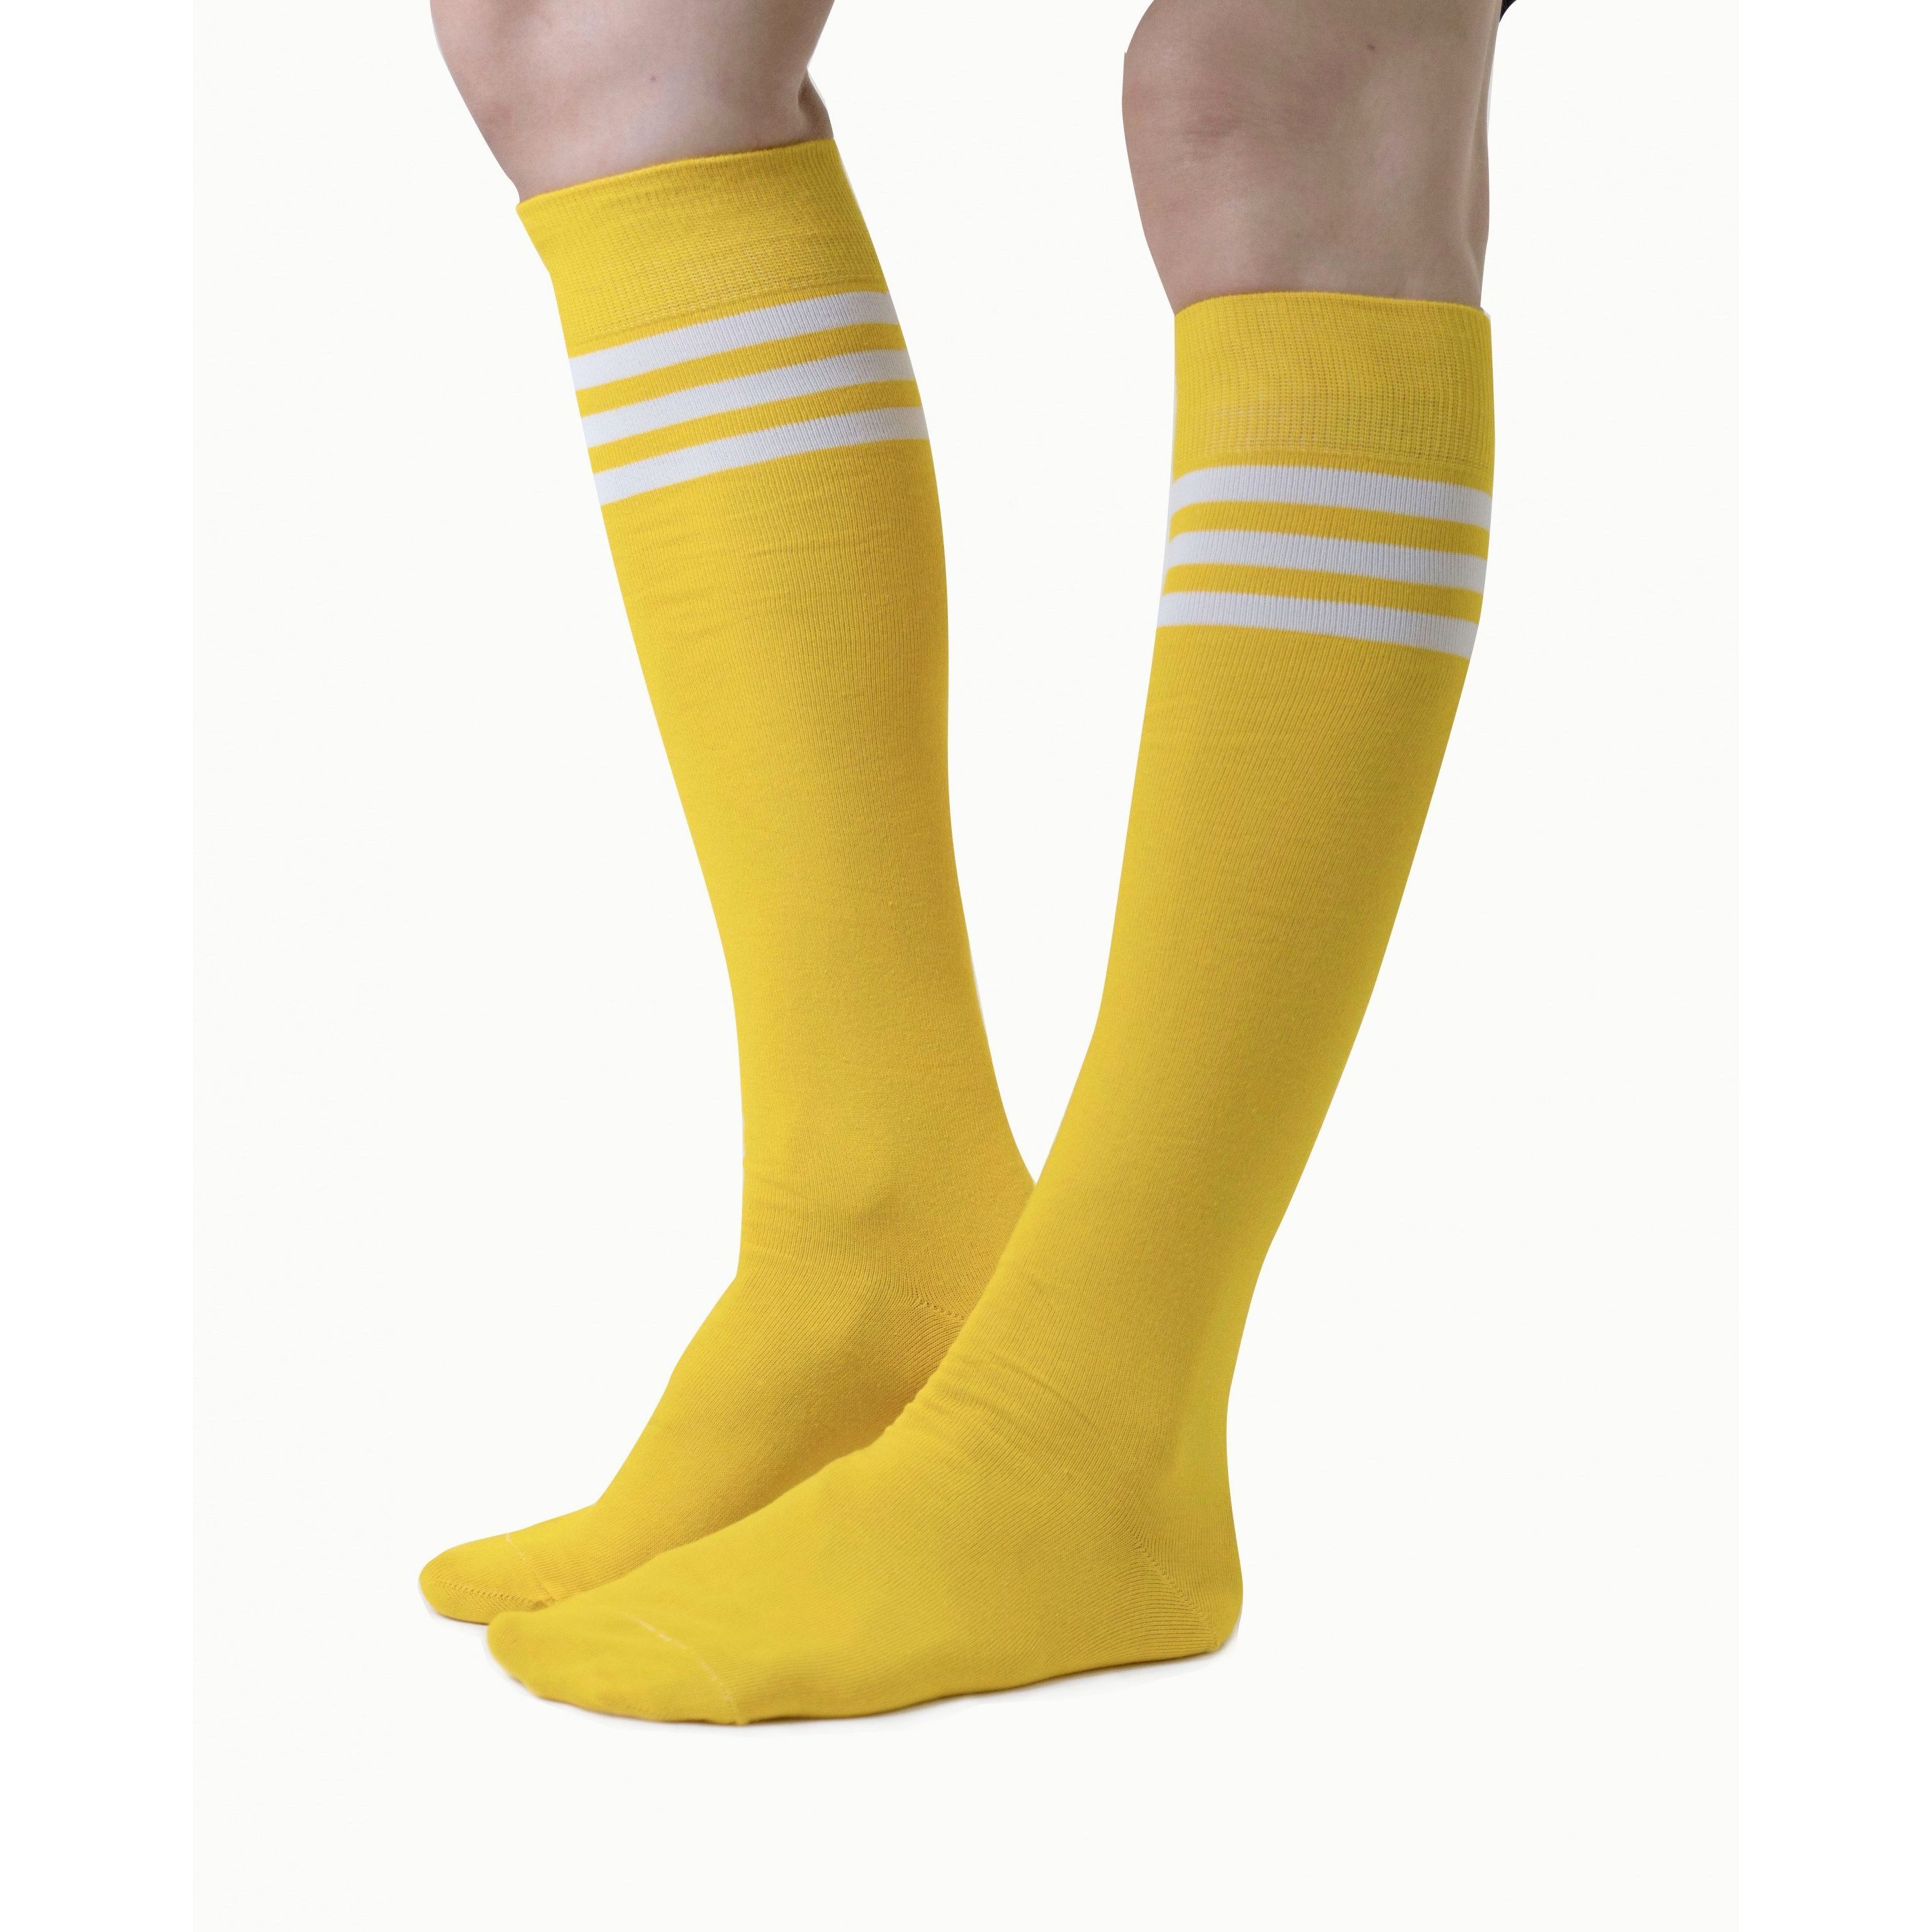 Гольфы мужские St. Friday Socks 431-8 желтые 34-37